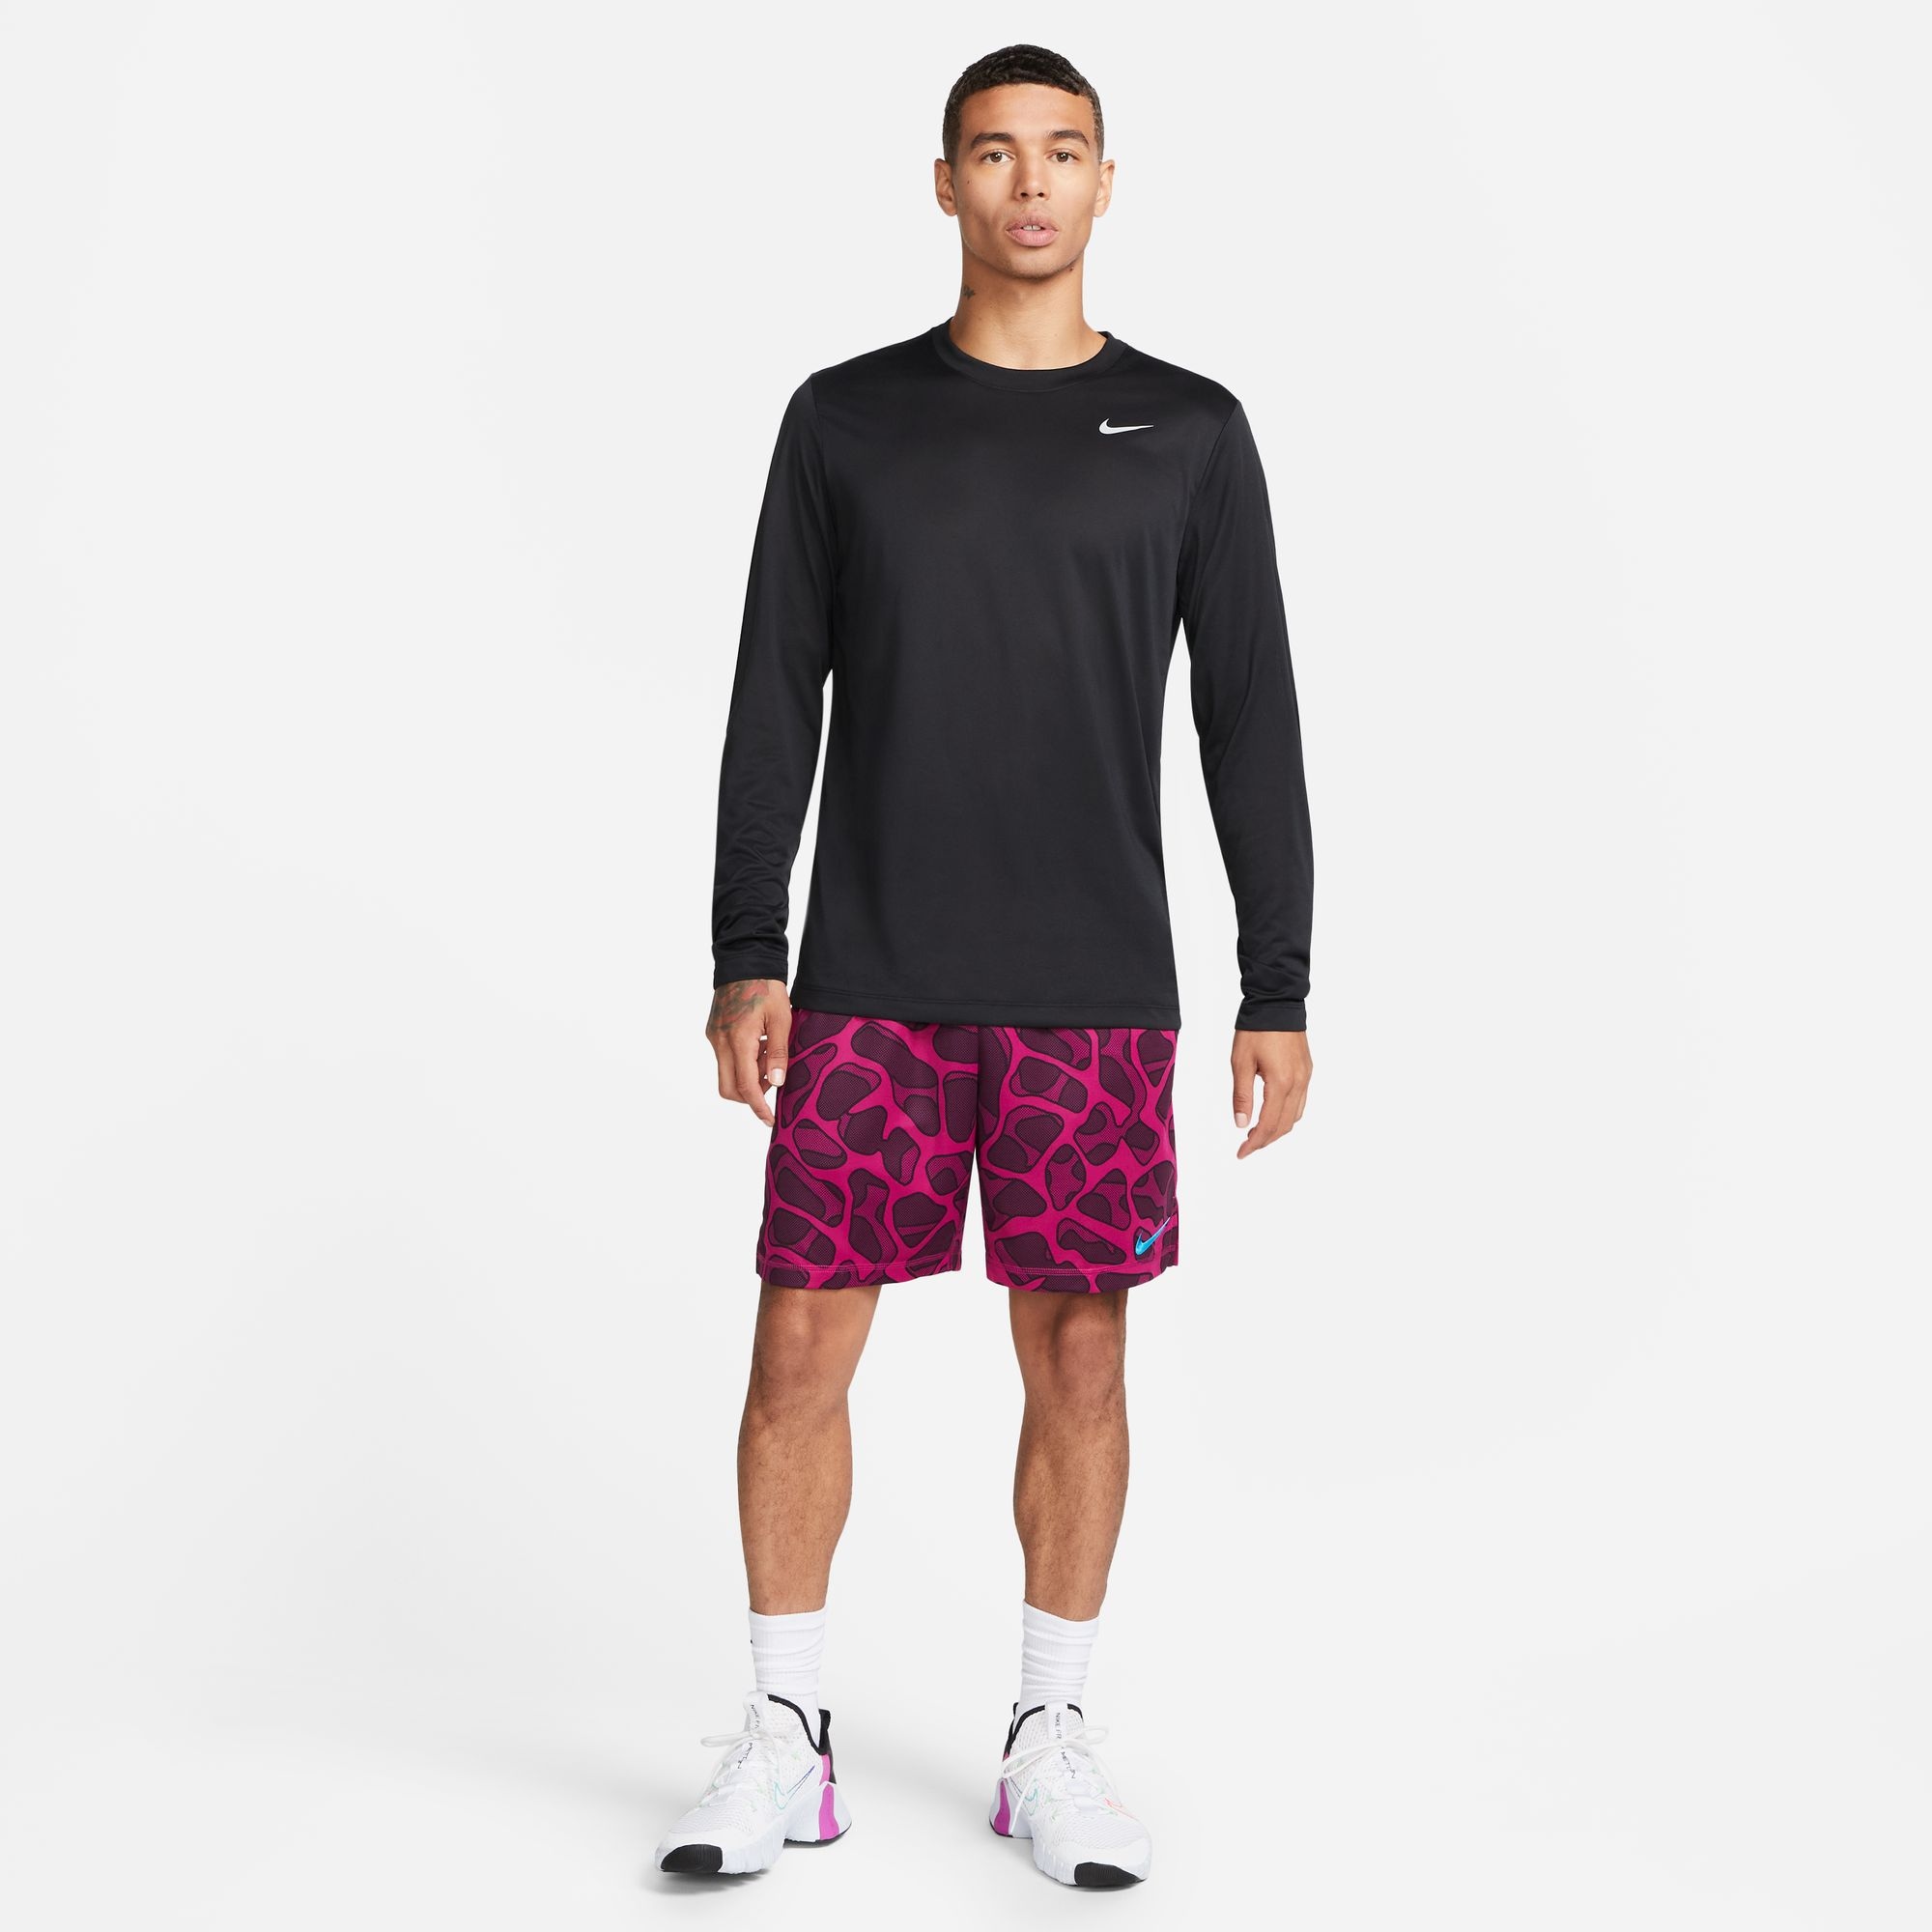 Nike Trainingsshirt »DRI-FIT LEGEND MEN'S LONG-SLEEVE FITNESS TOP«